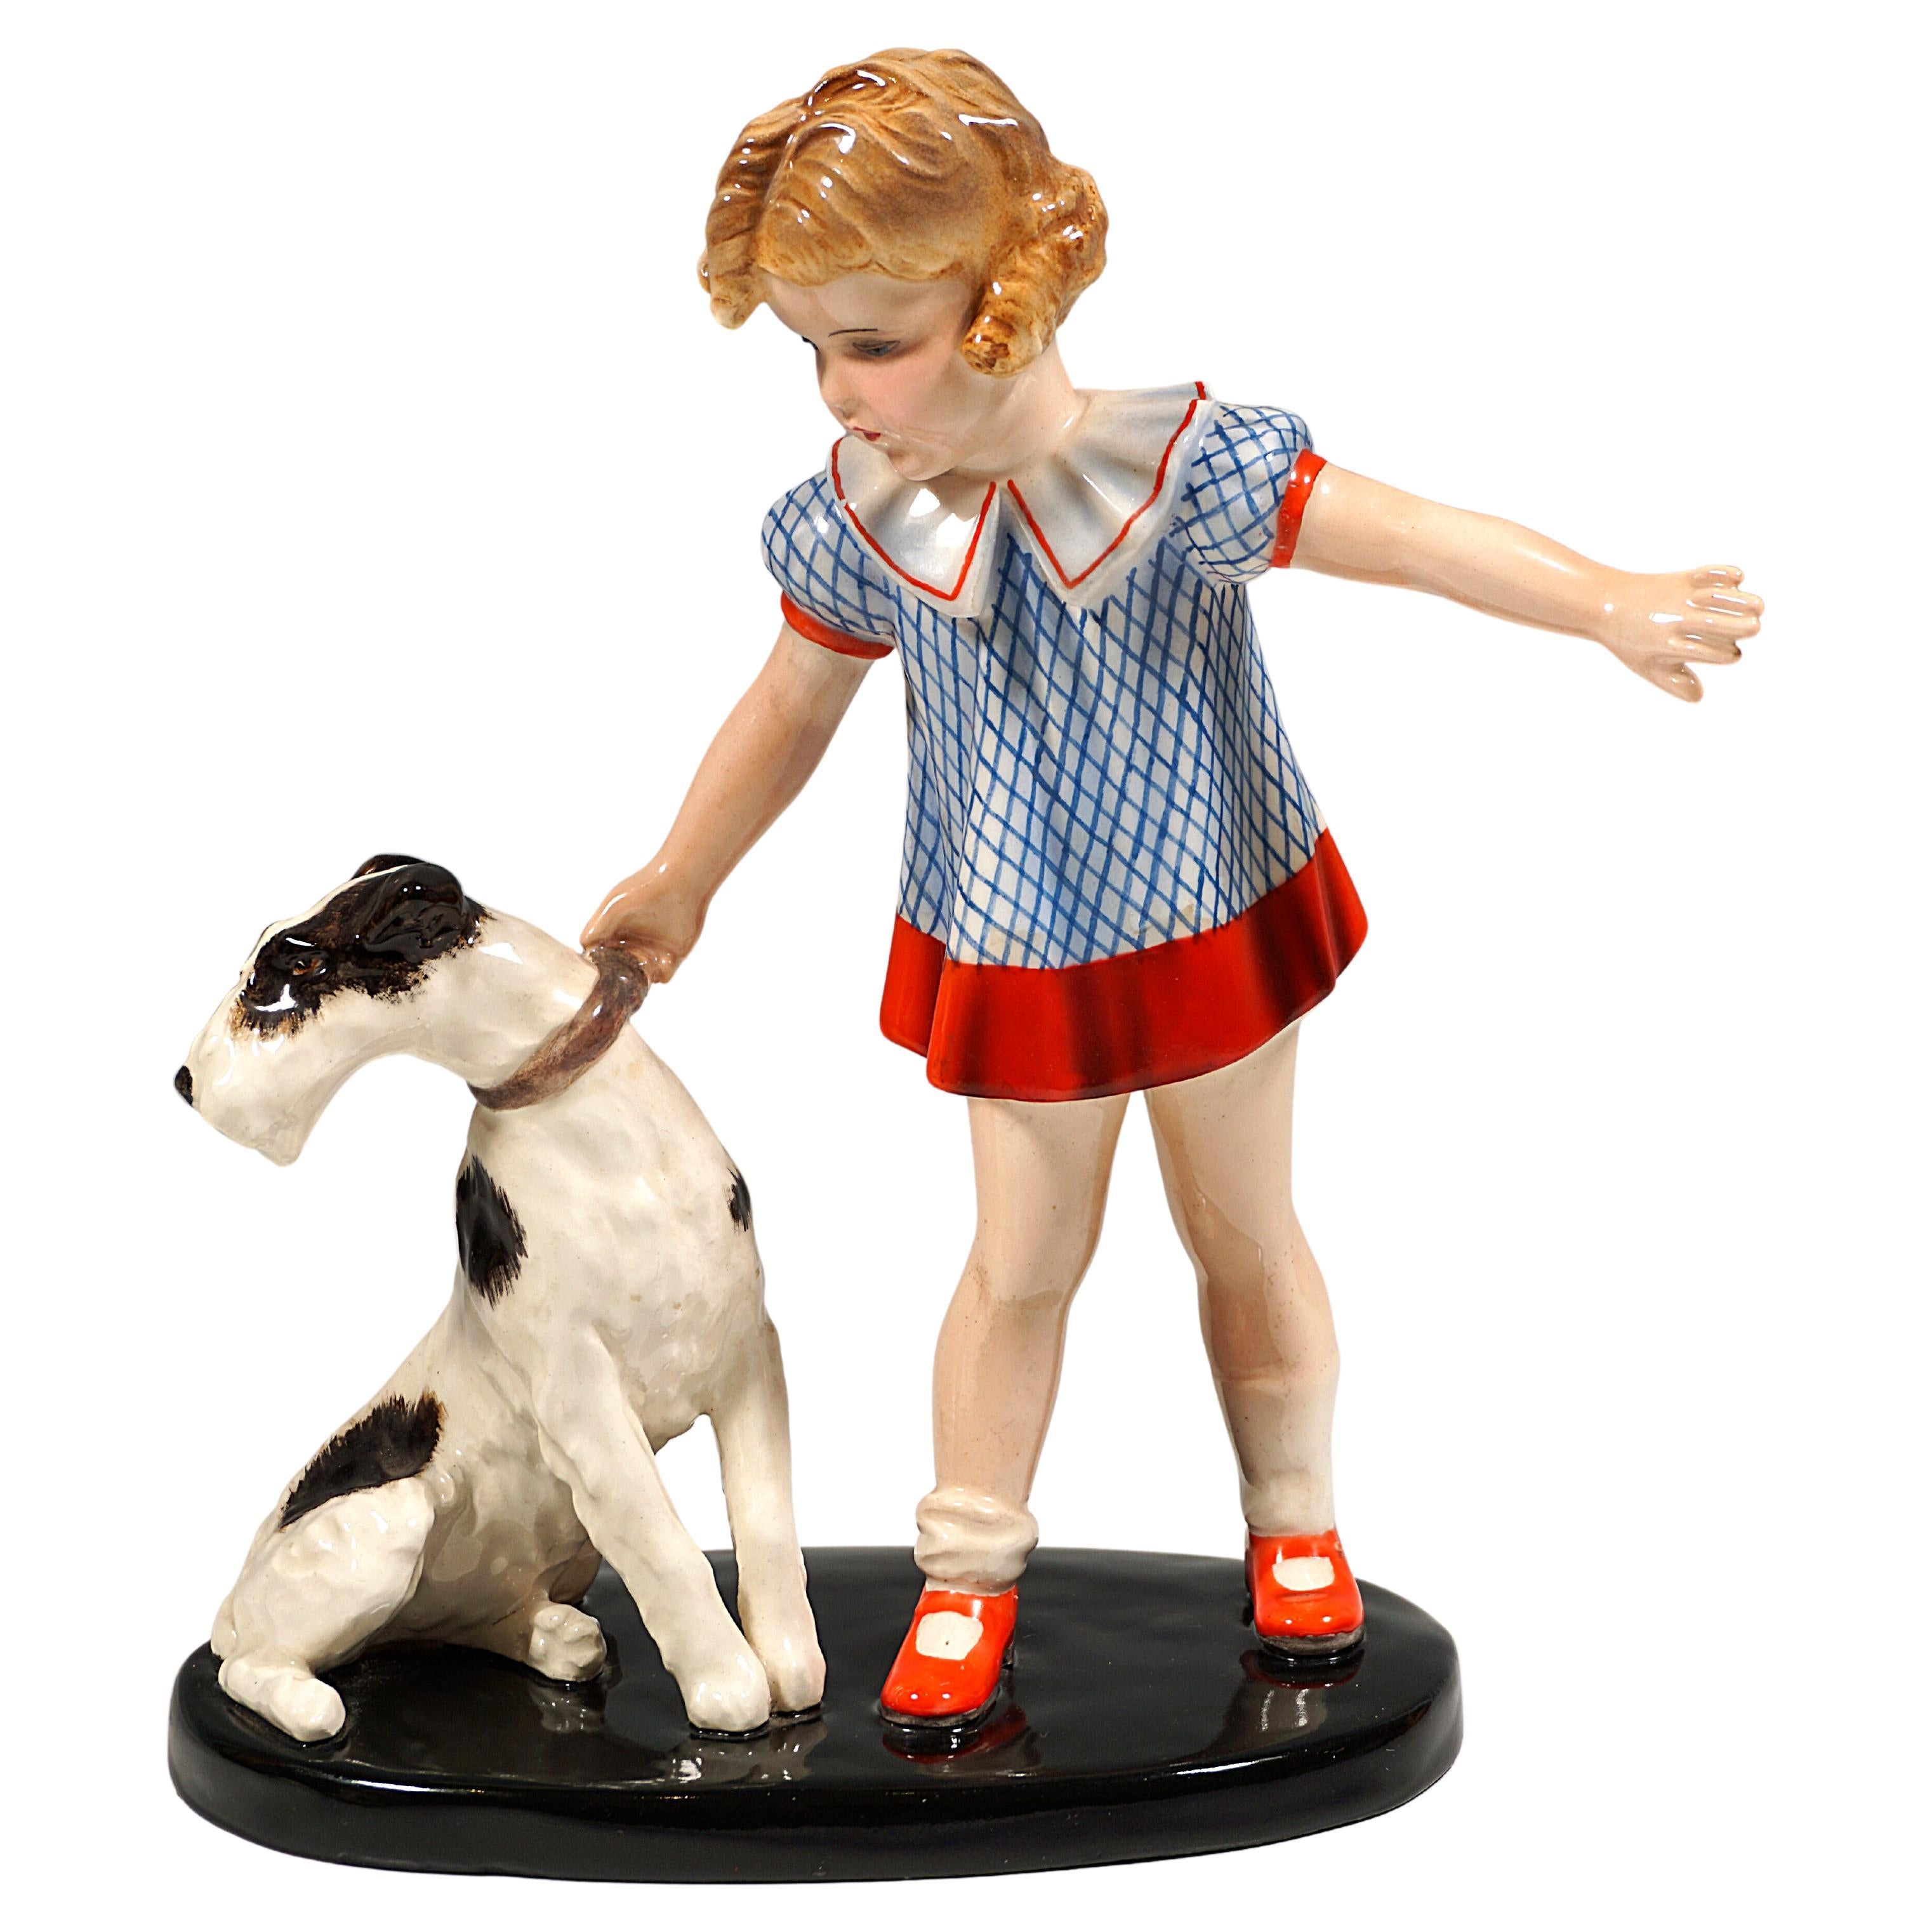 Goldscheider Figurine Group, Girl With Fox Terrier, by Germaine Bouret, 1938